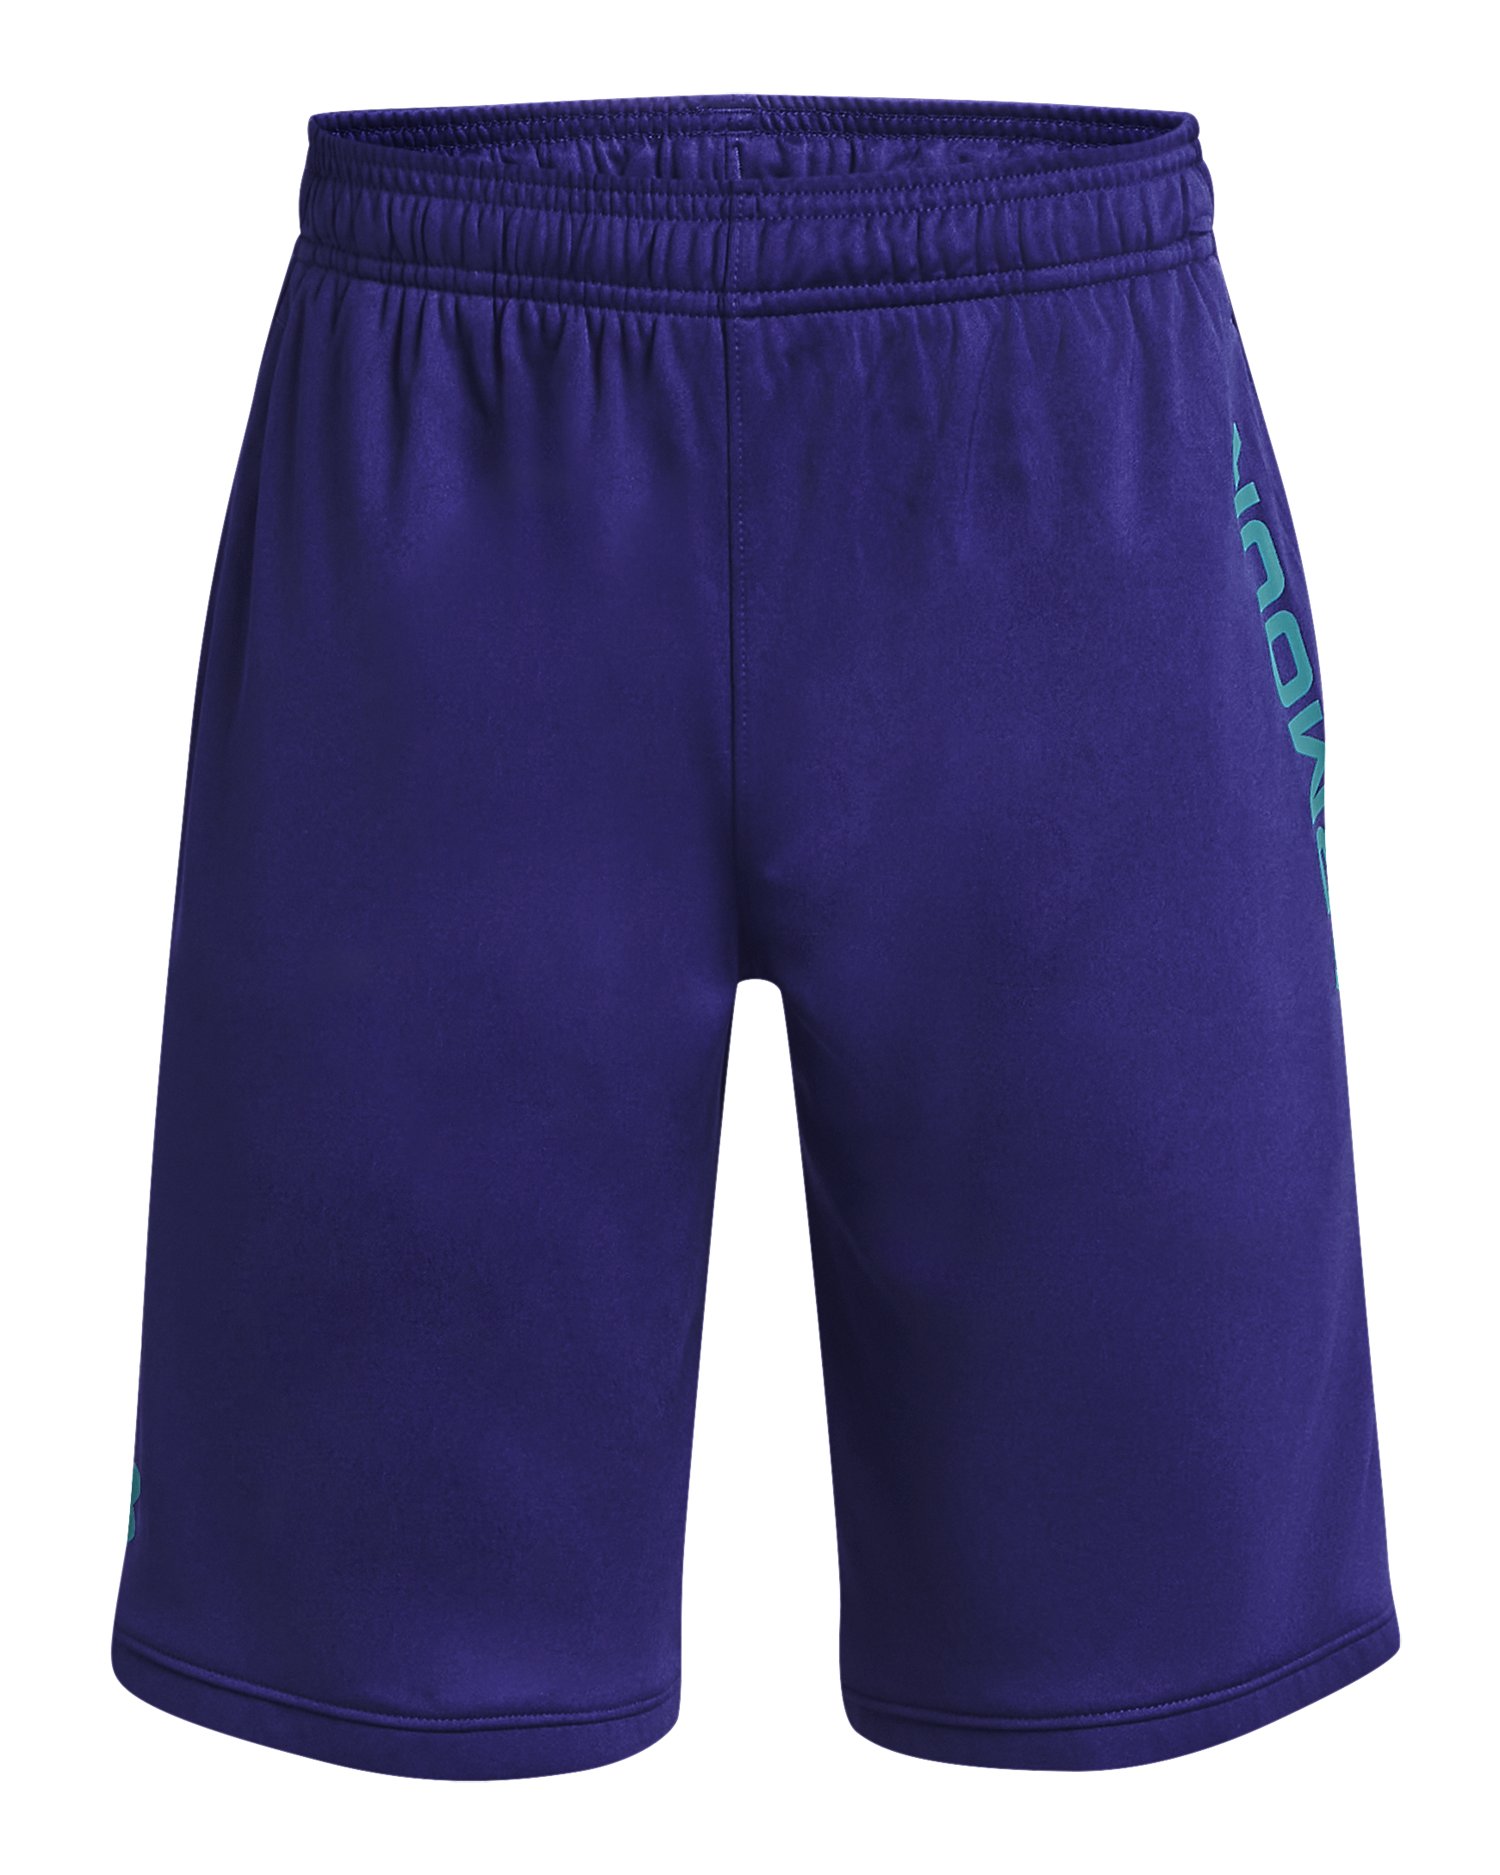 boy basketball shorts